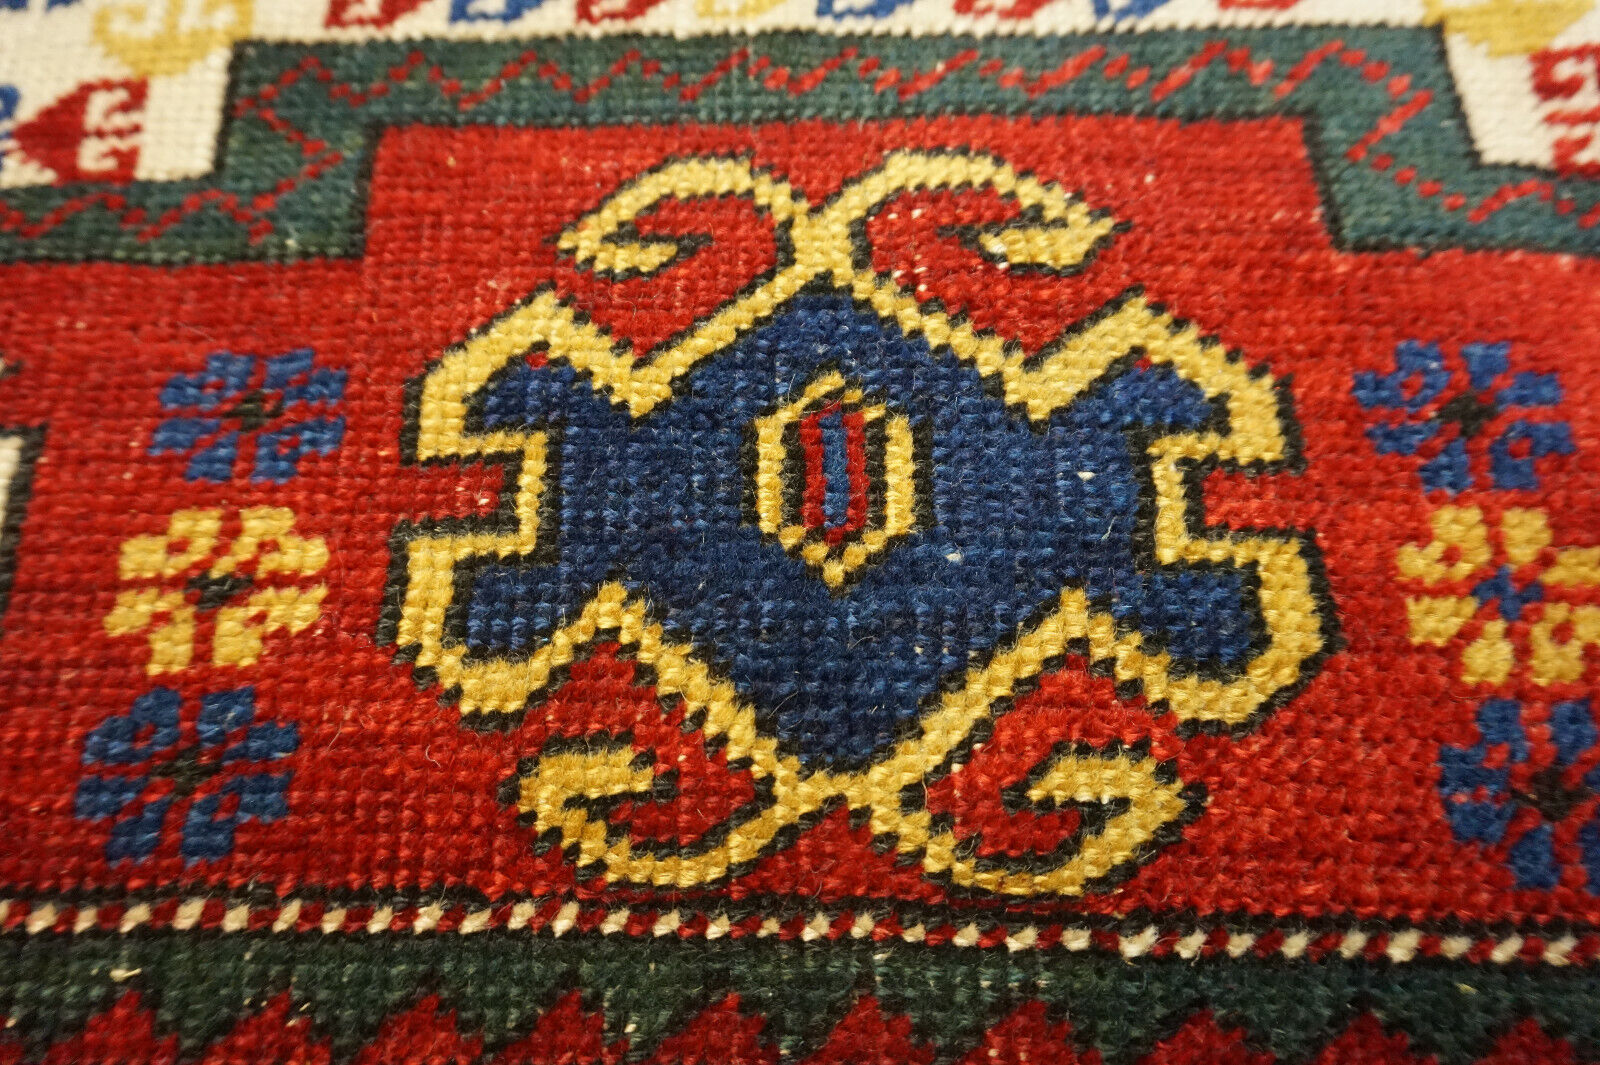 Close-up of the intricate geometric patterns on the Handmade Antique Caucasian Kazak Prayer Rug